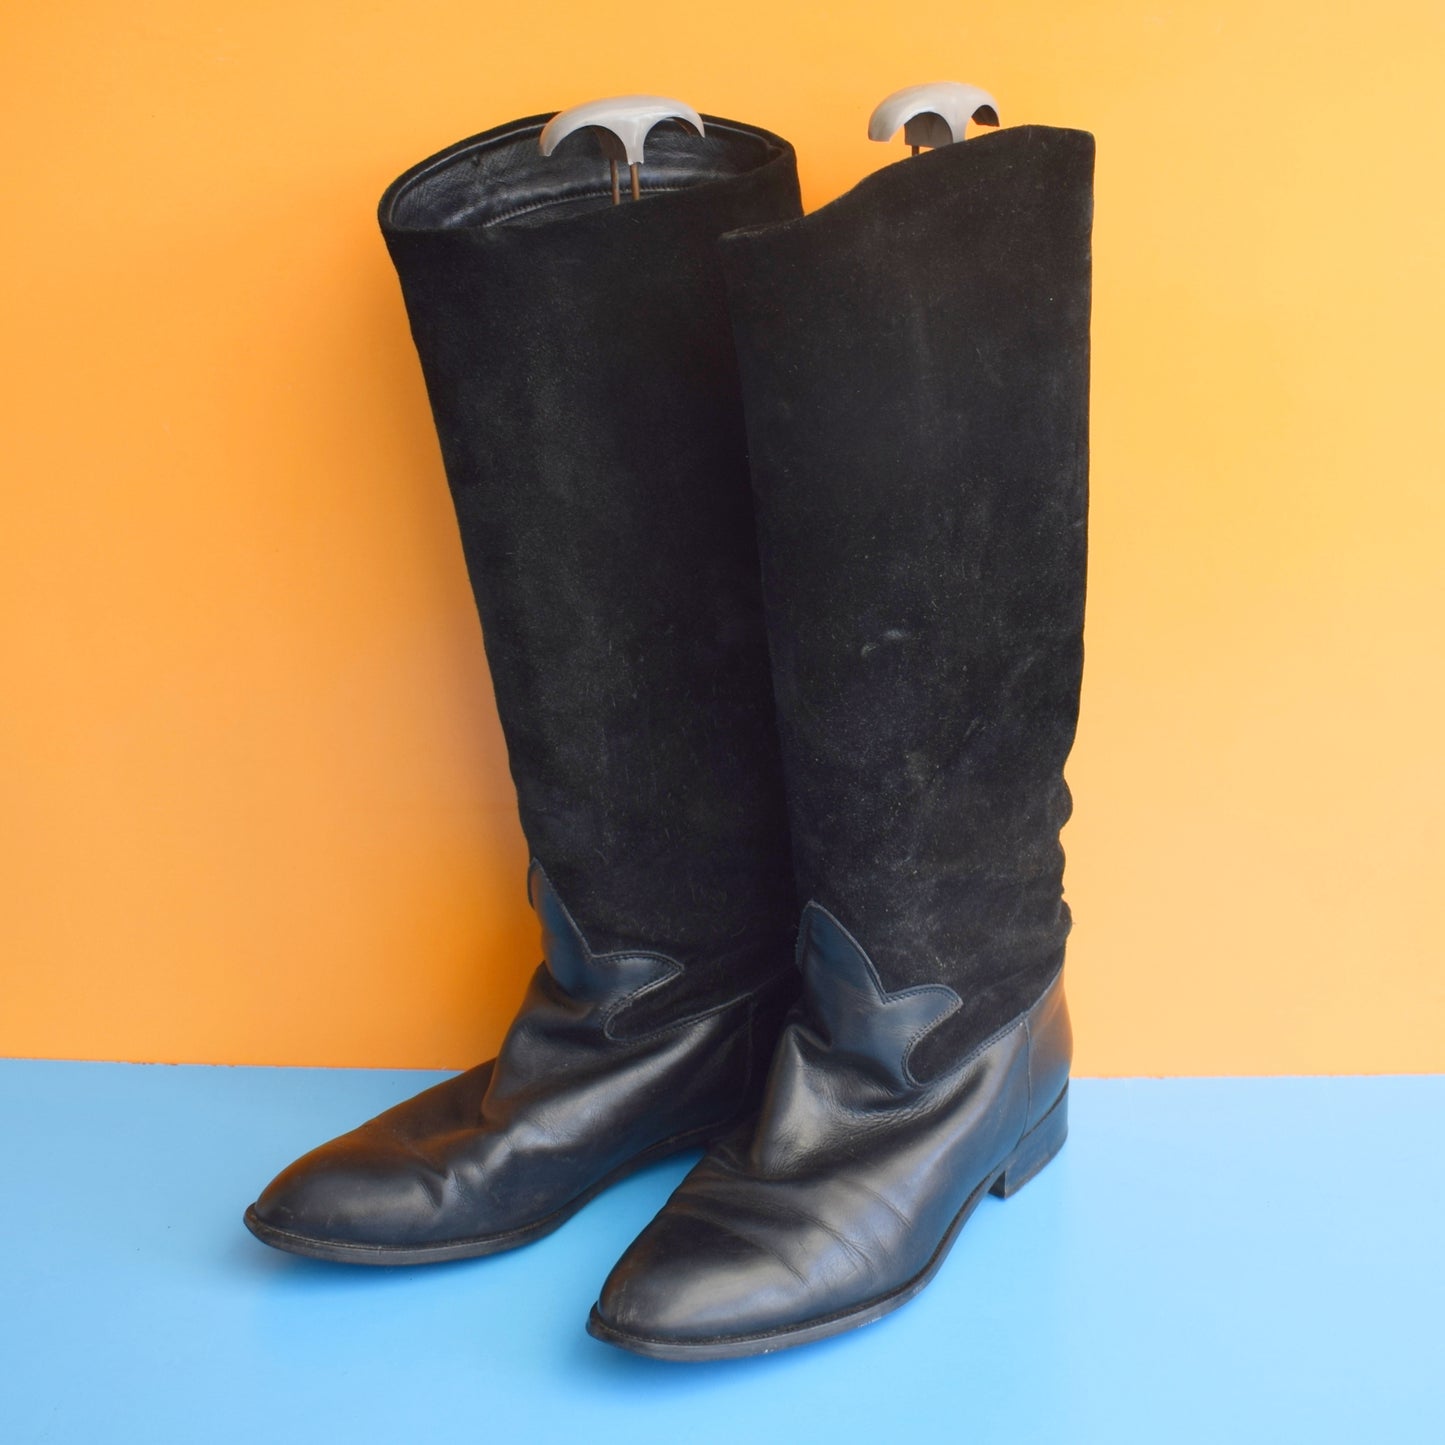 Vintage 1980s Italian Suede Boots - Black - Sz 9